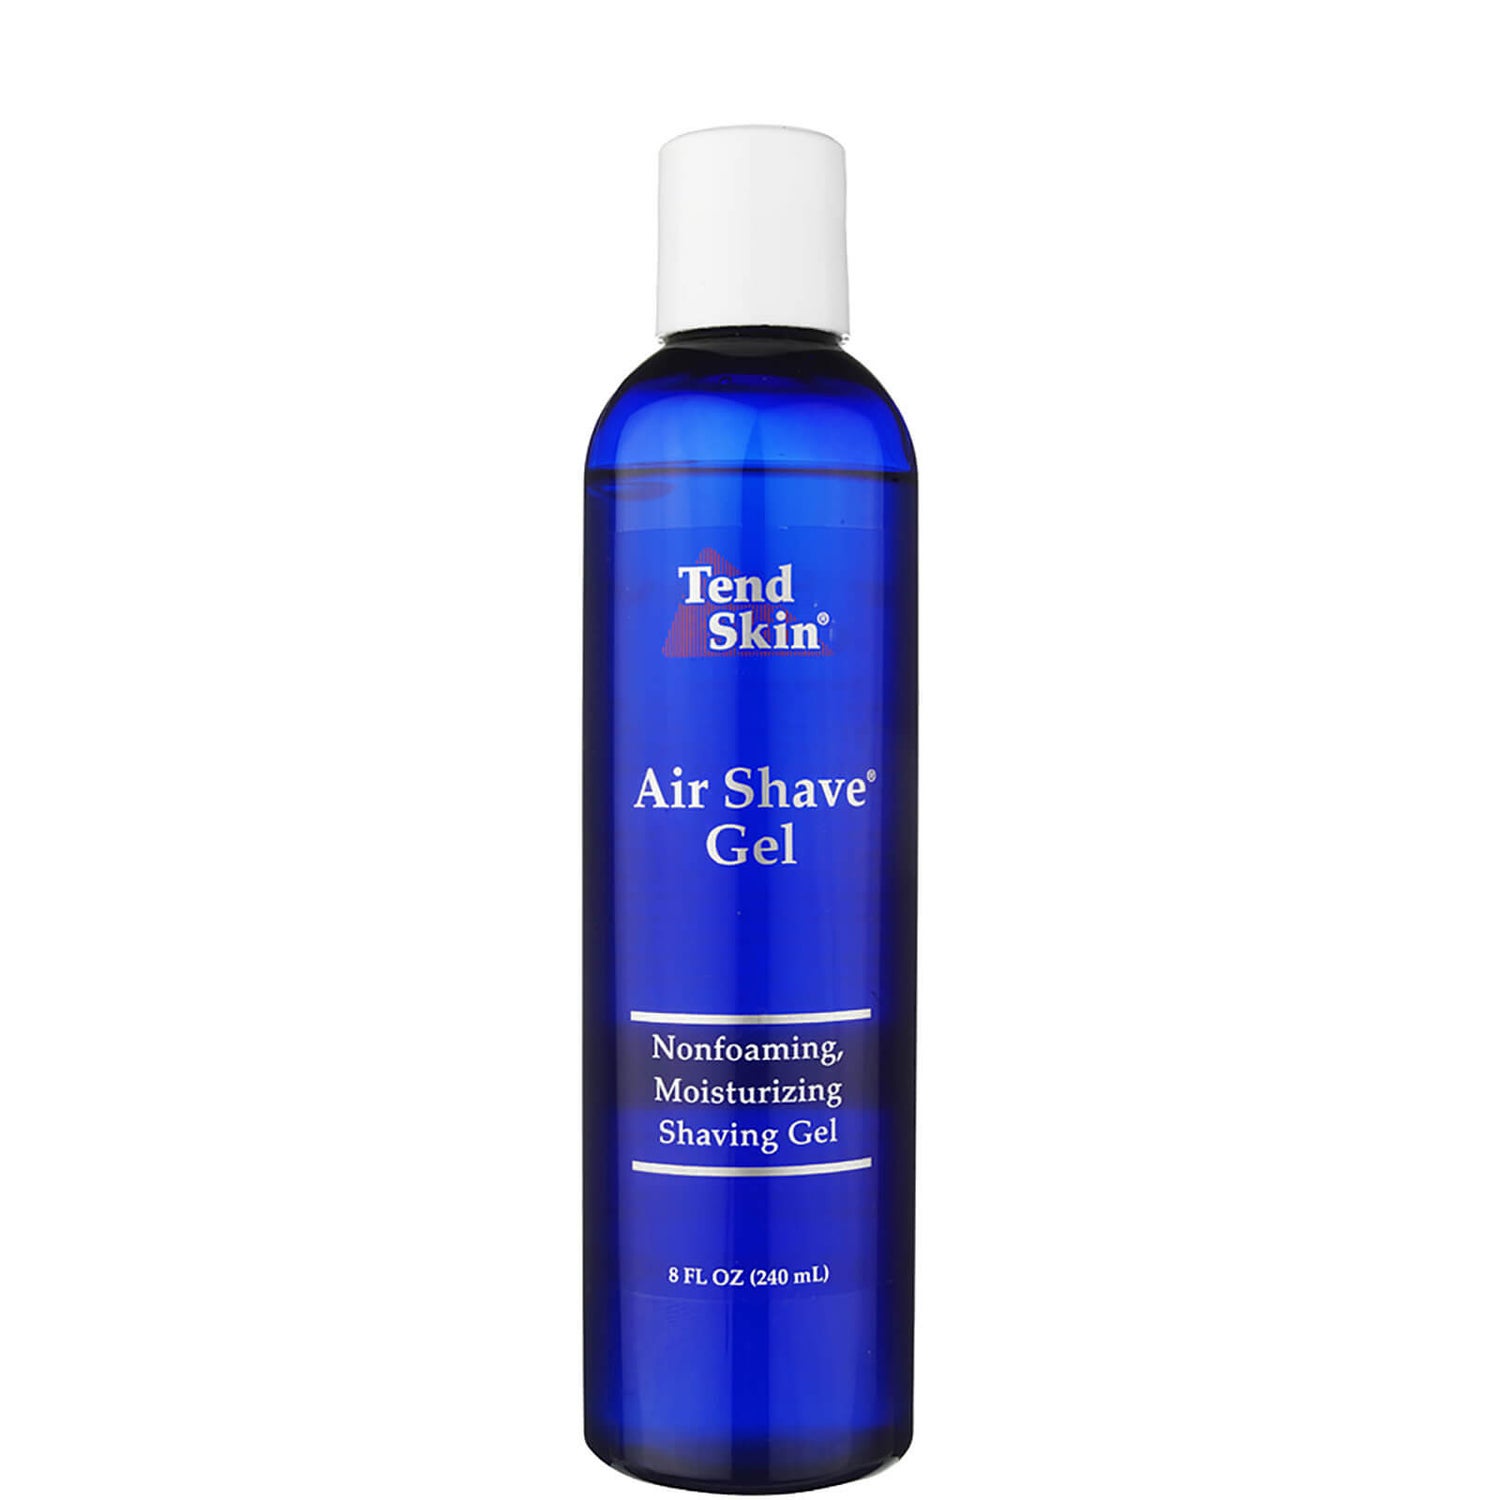 Tend Skin Air Shave Gel 240 ml